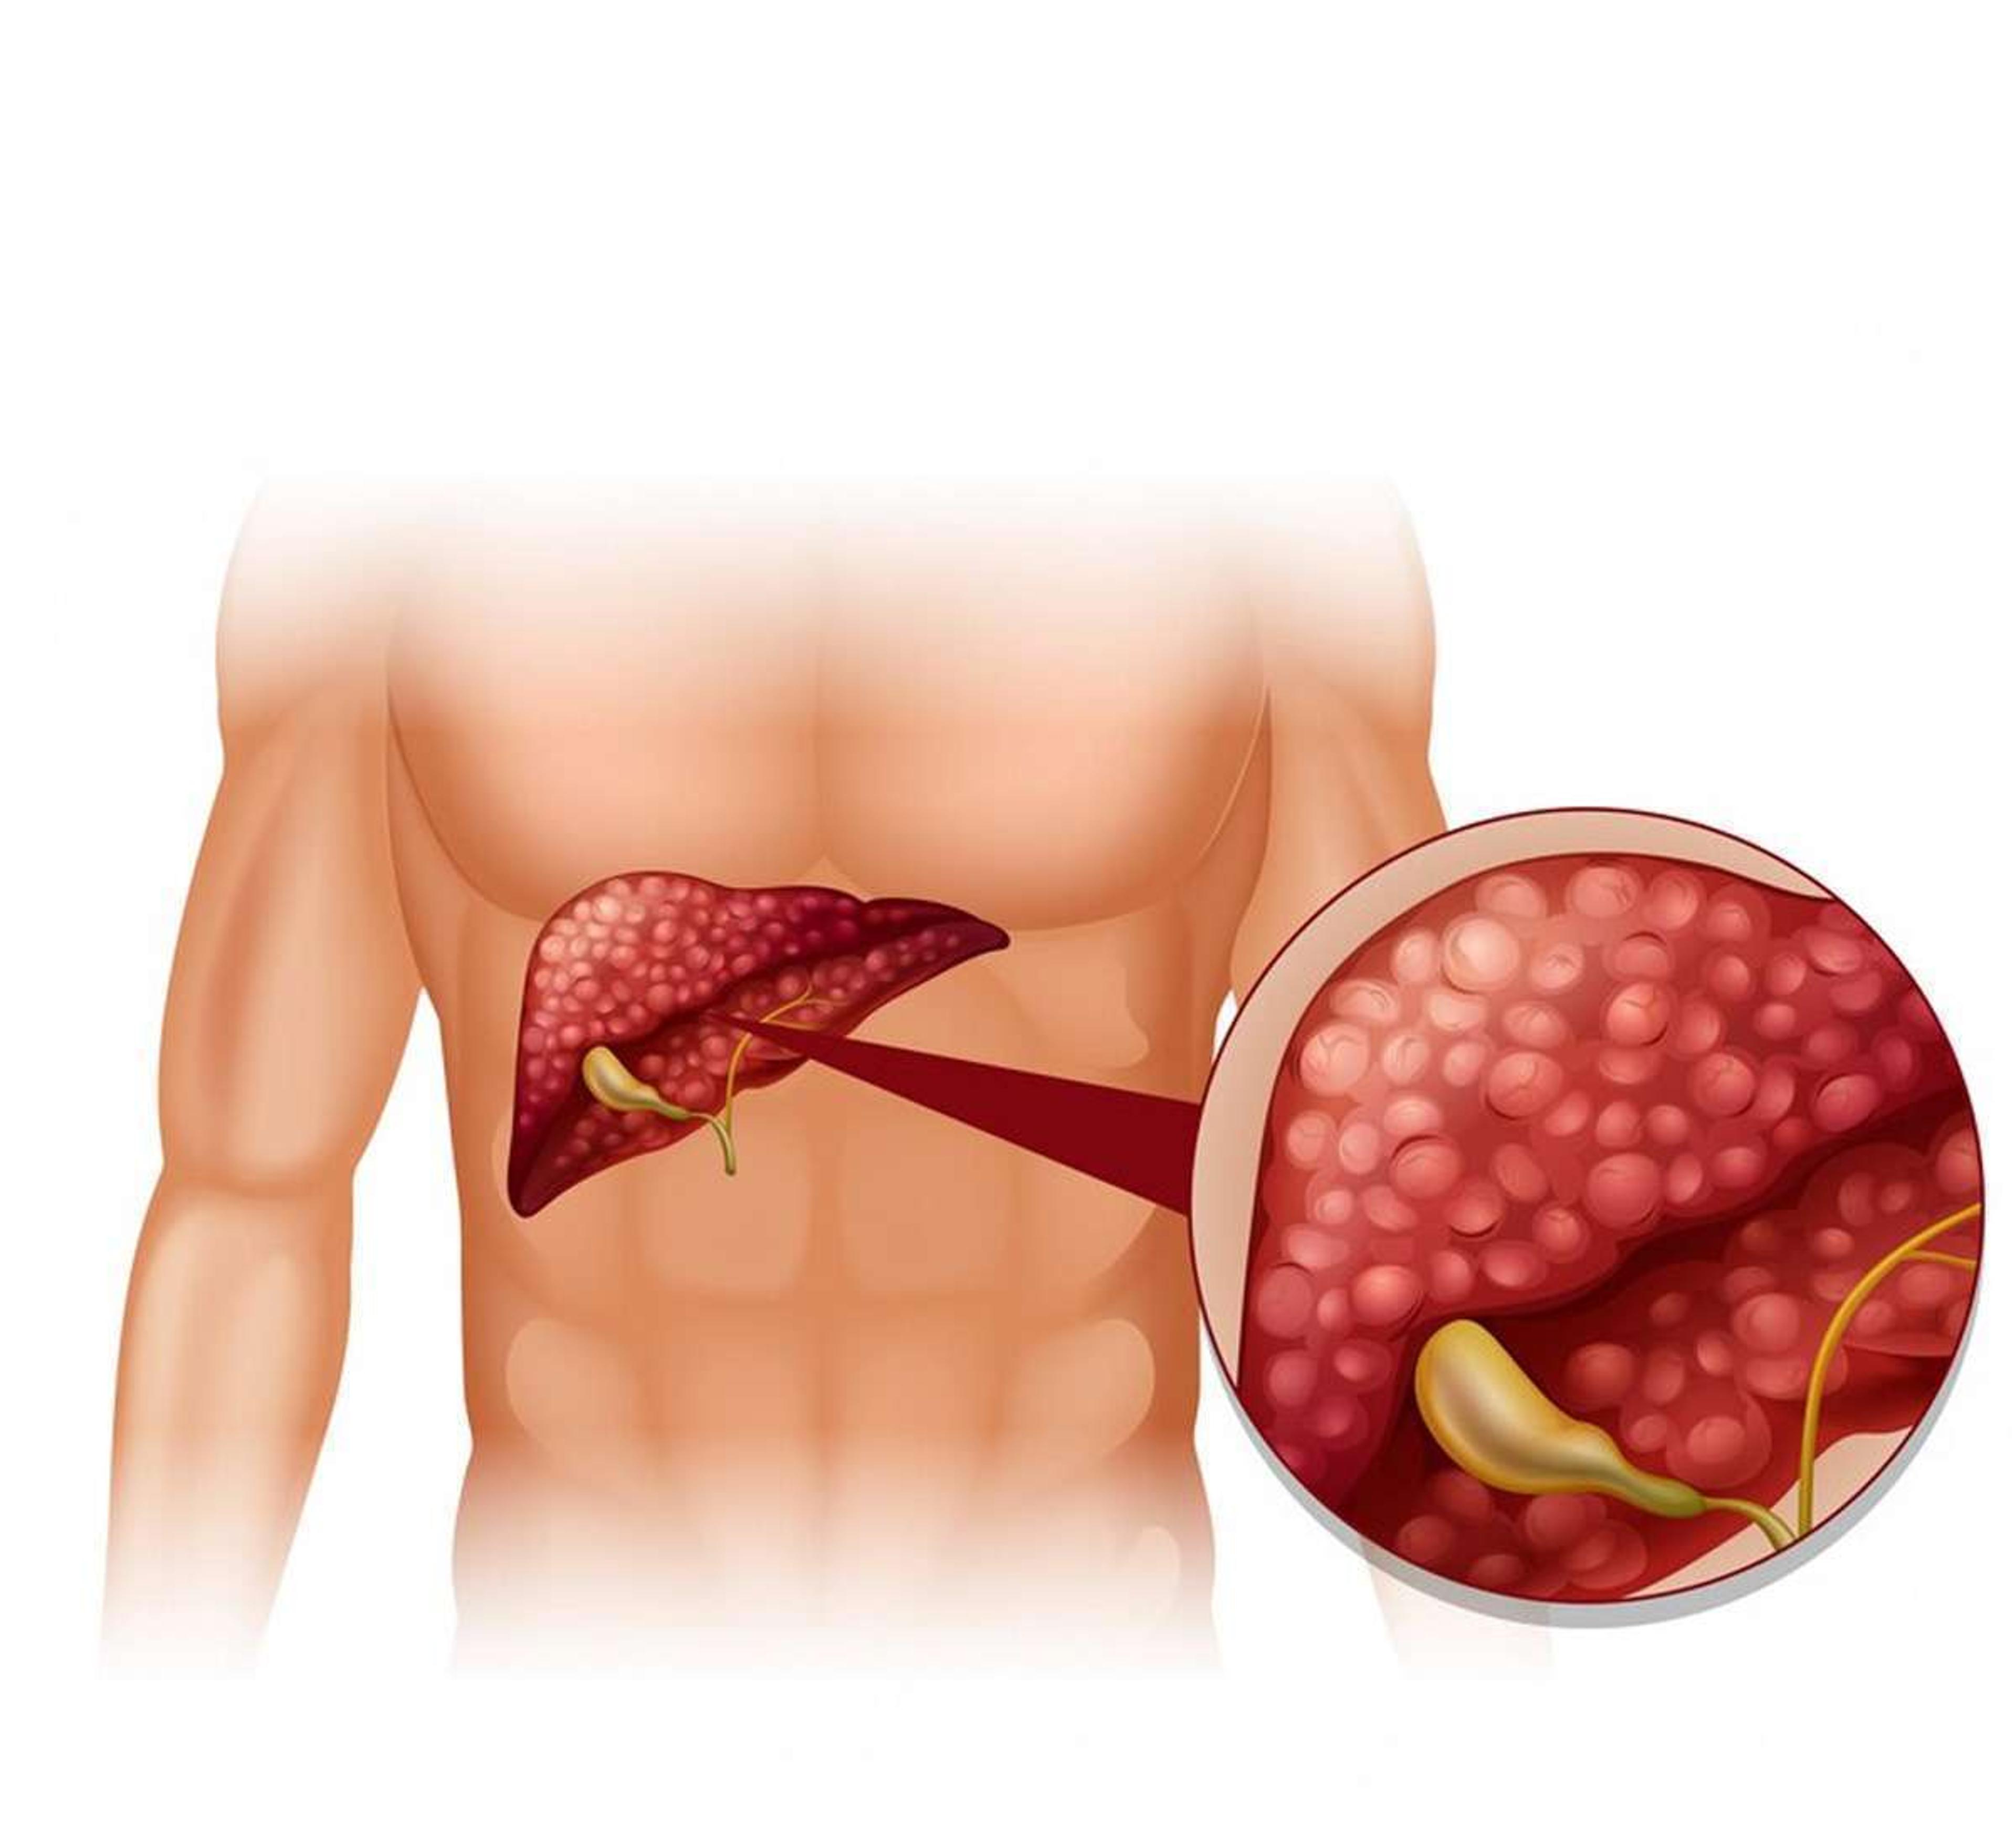 Liver Cancer Symptoms : फ्लू जैसे लक्षण? सावधान हो जाएं, लिवर कैंसर का हो सकता है खतरा